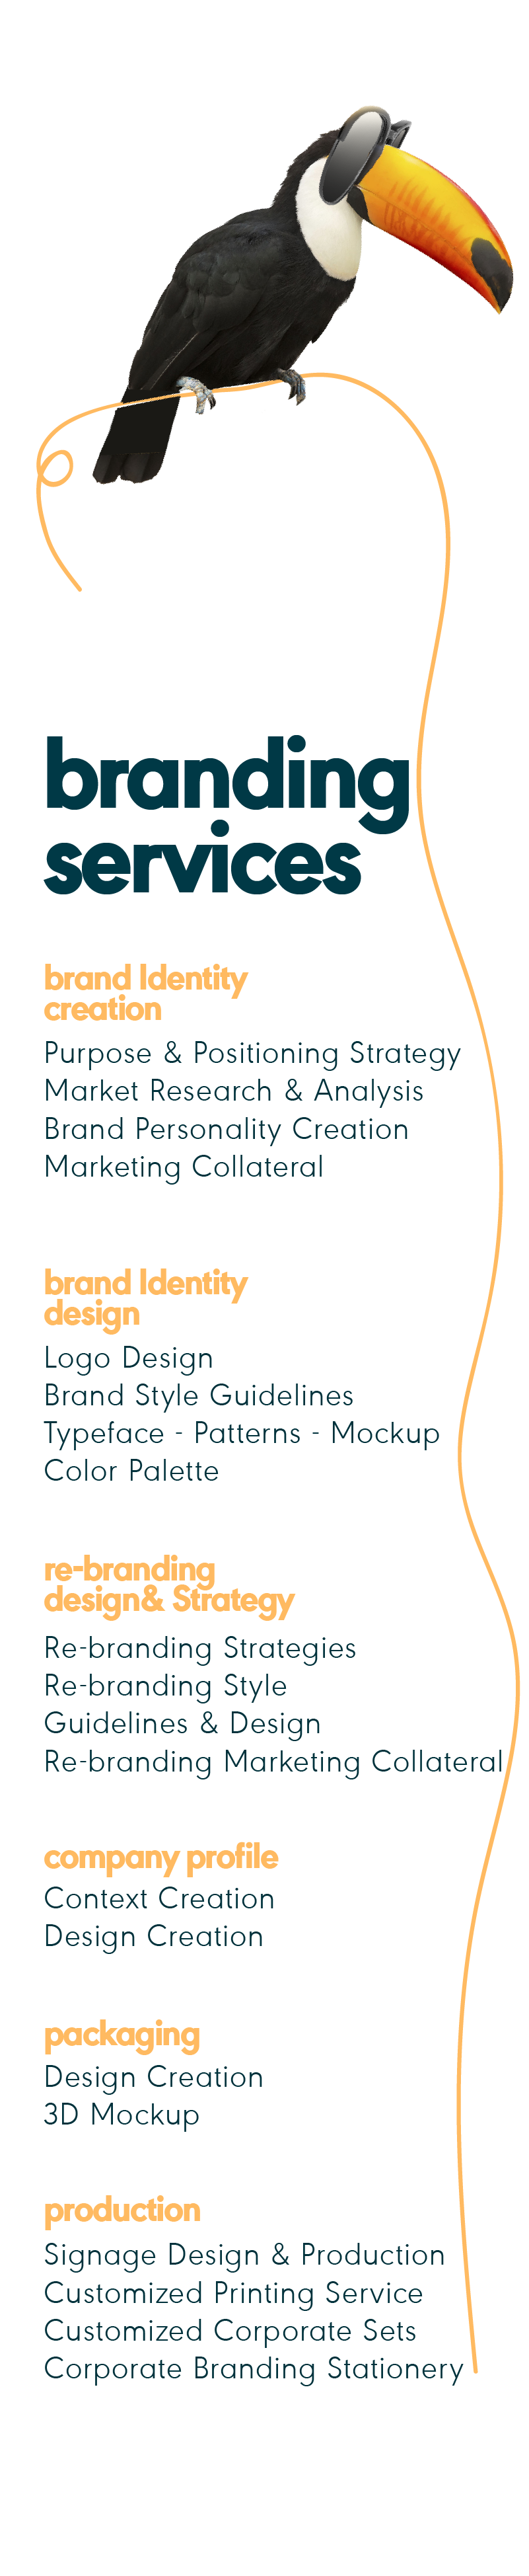 Brand Identity Building